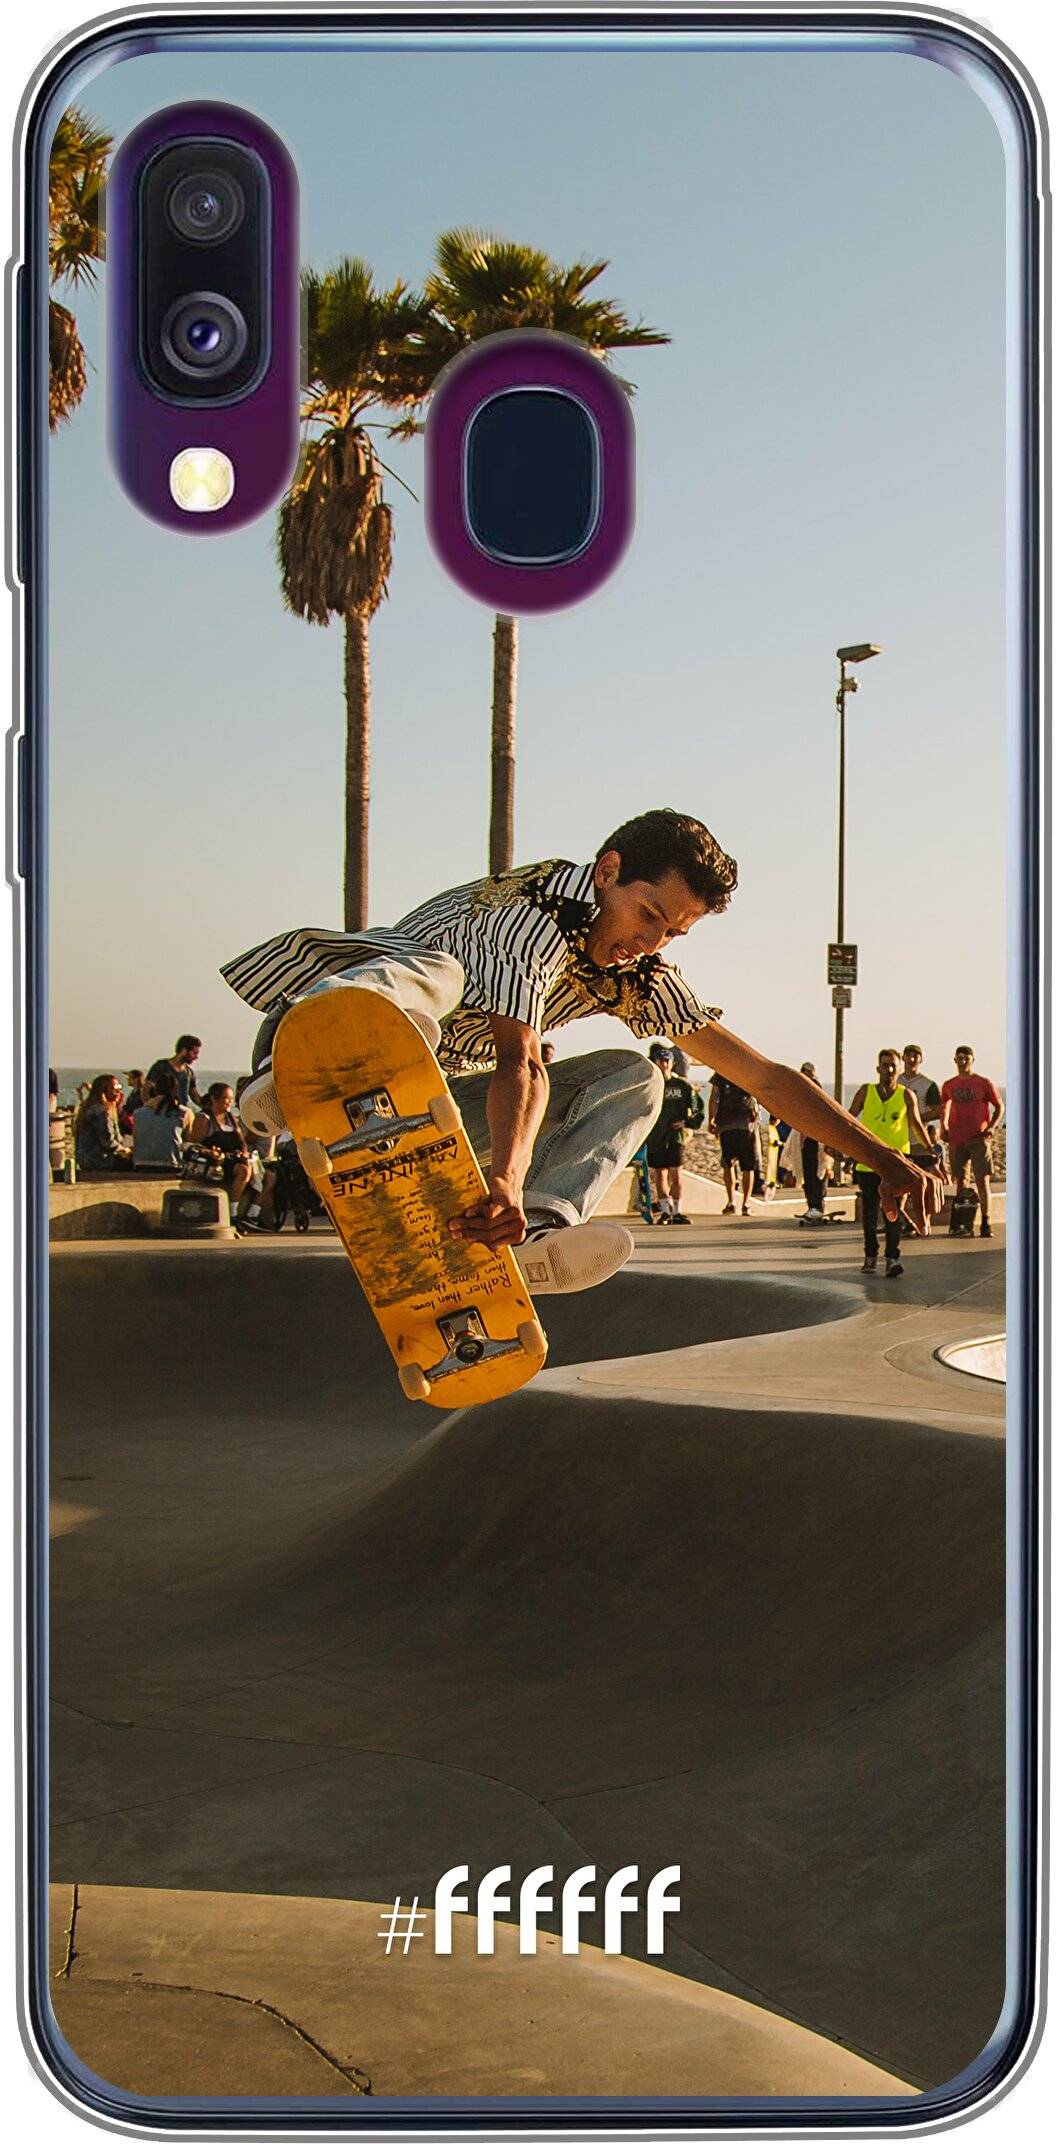 Let's Skate Galaxy A50